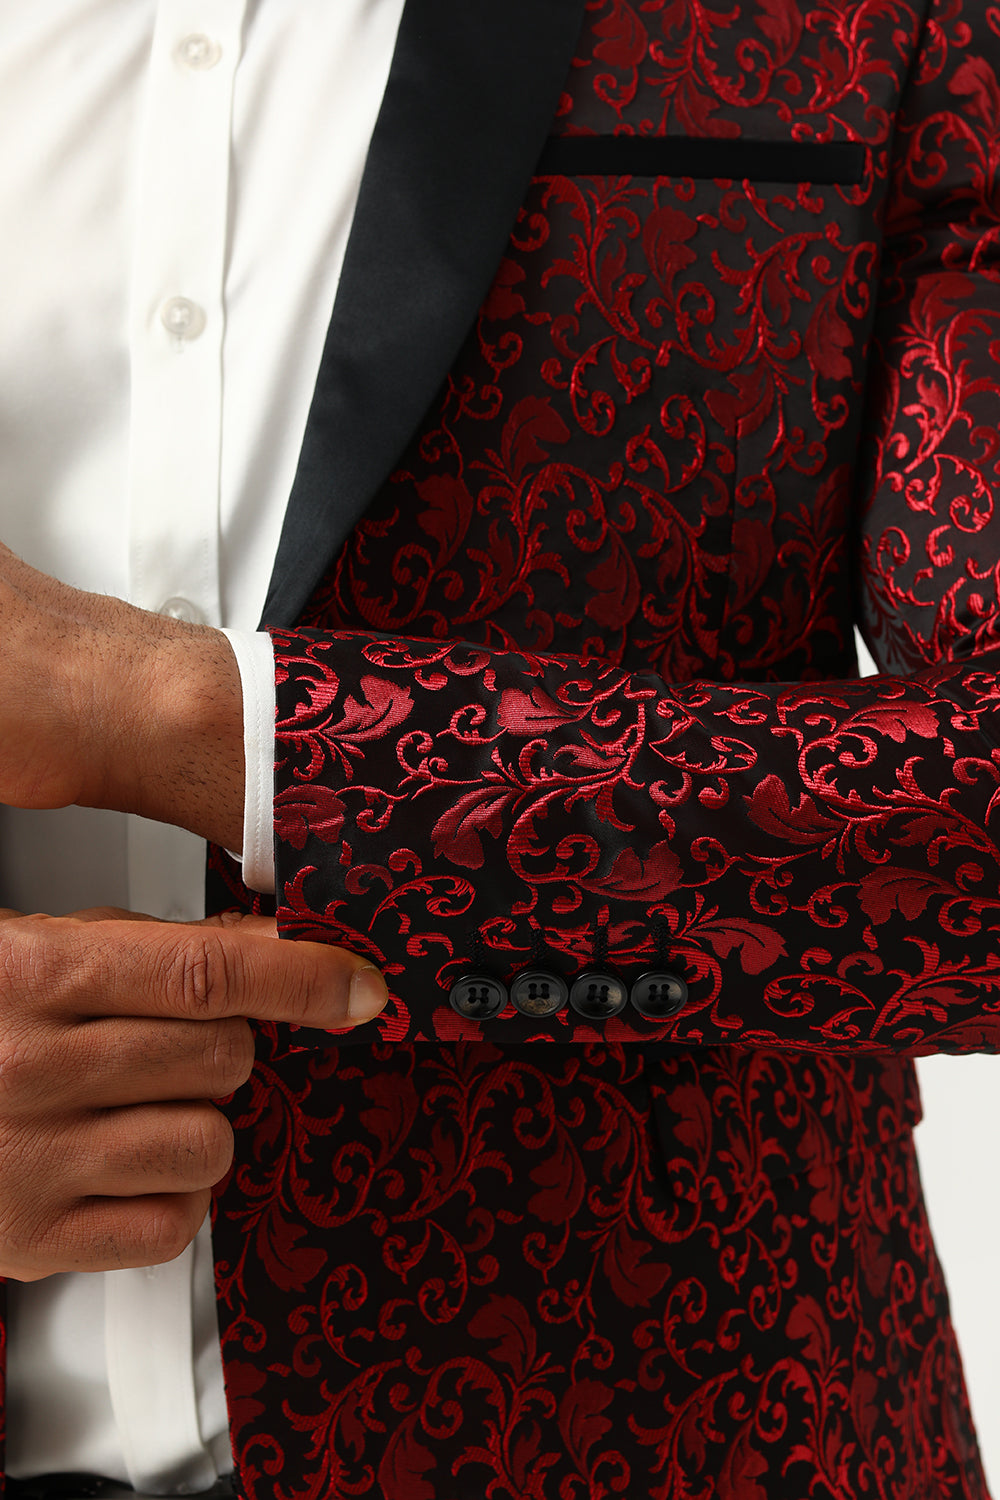 One Button Red Shawl Lapel Jacquard Men's Prom Blazer